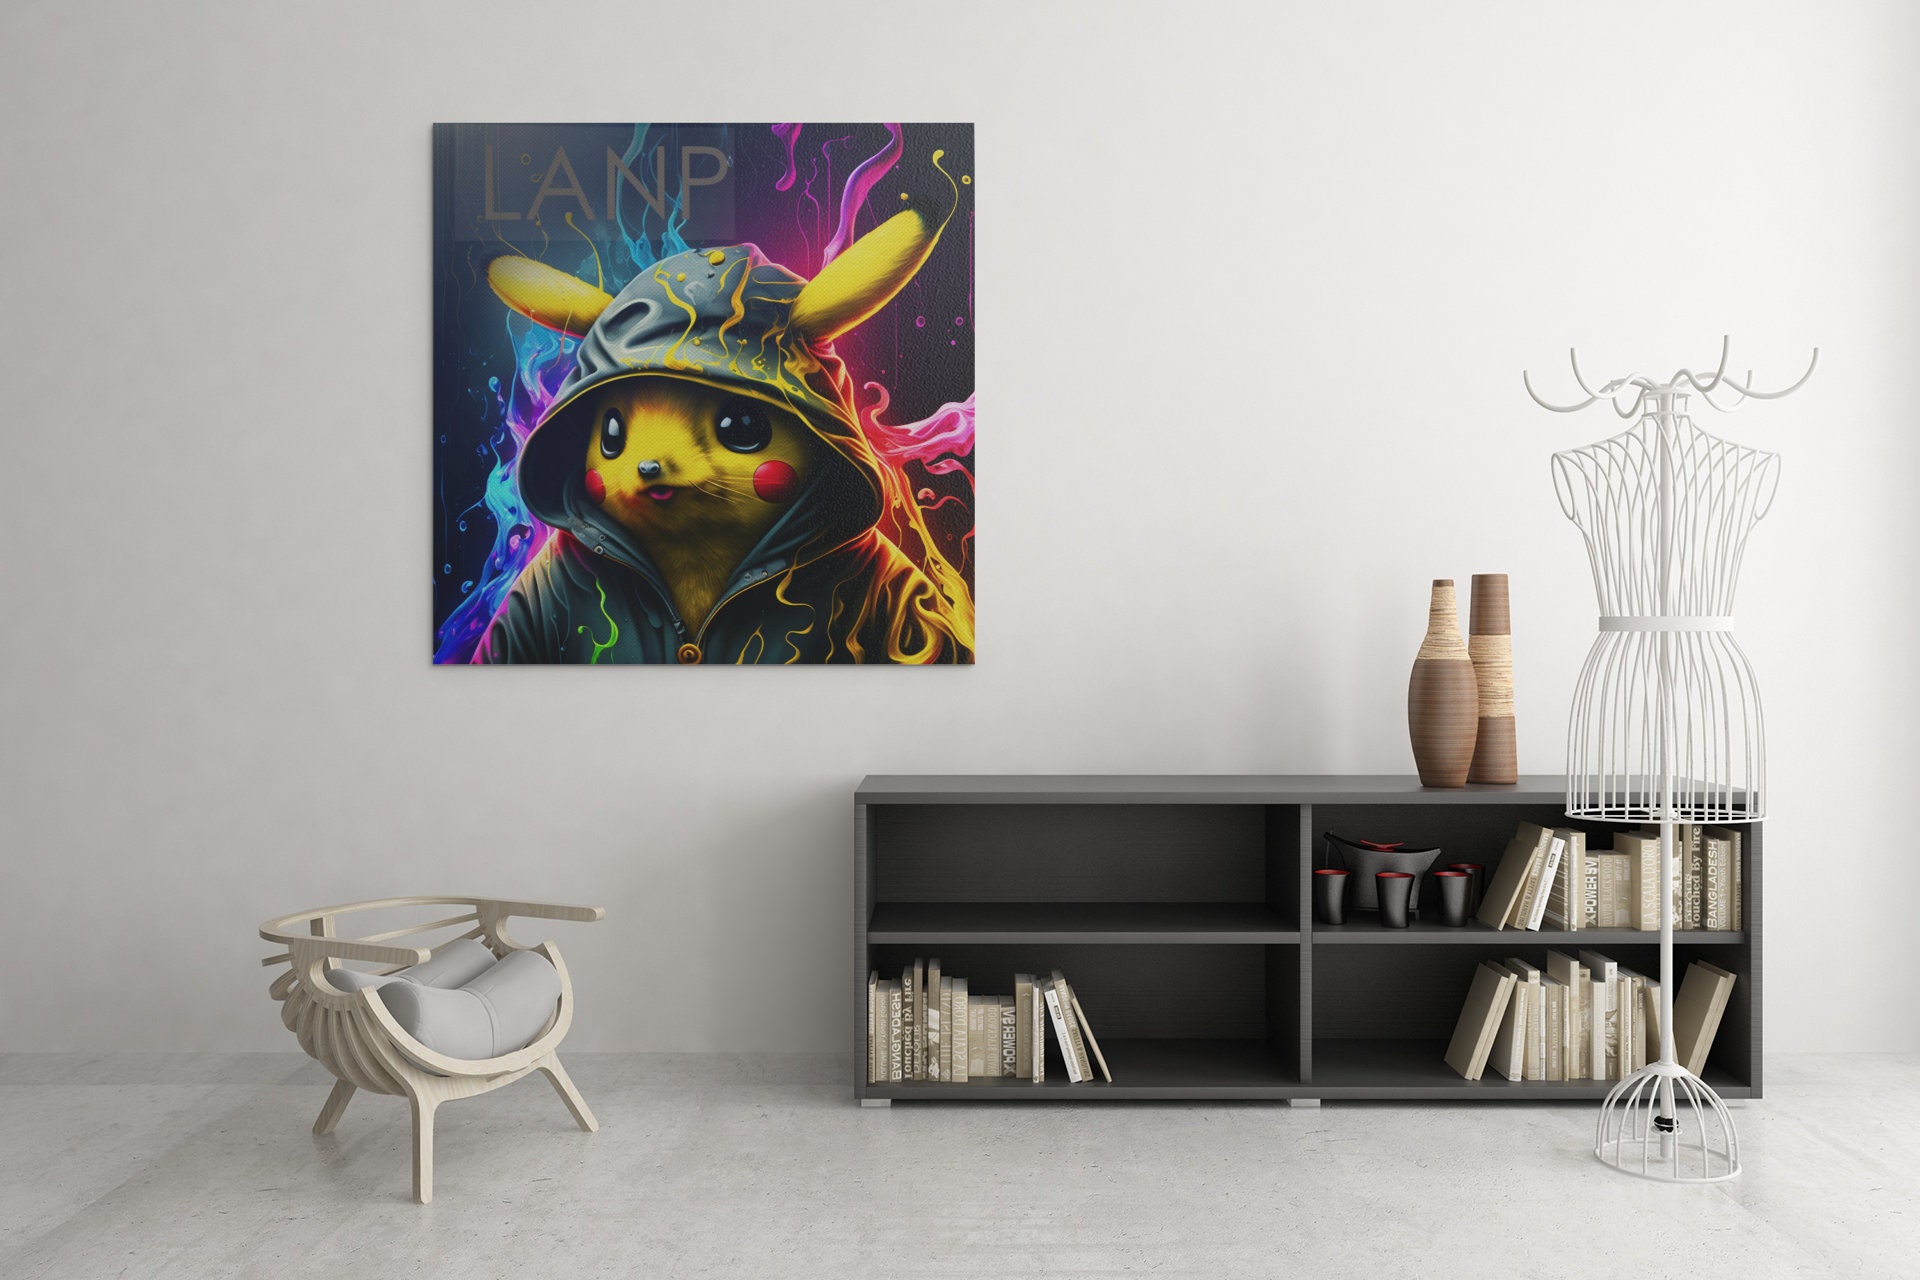 Pikachu Set Art Print Digital Files decor nursery room - Inspire Uplift